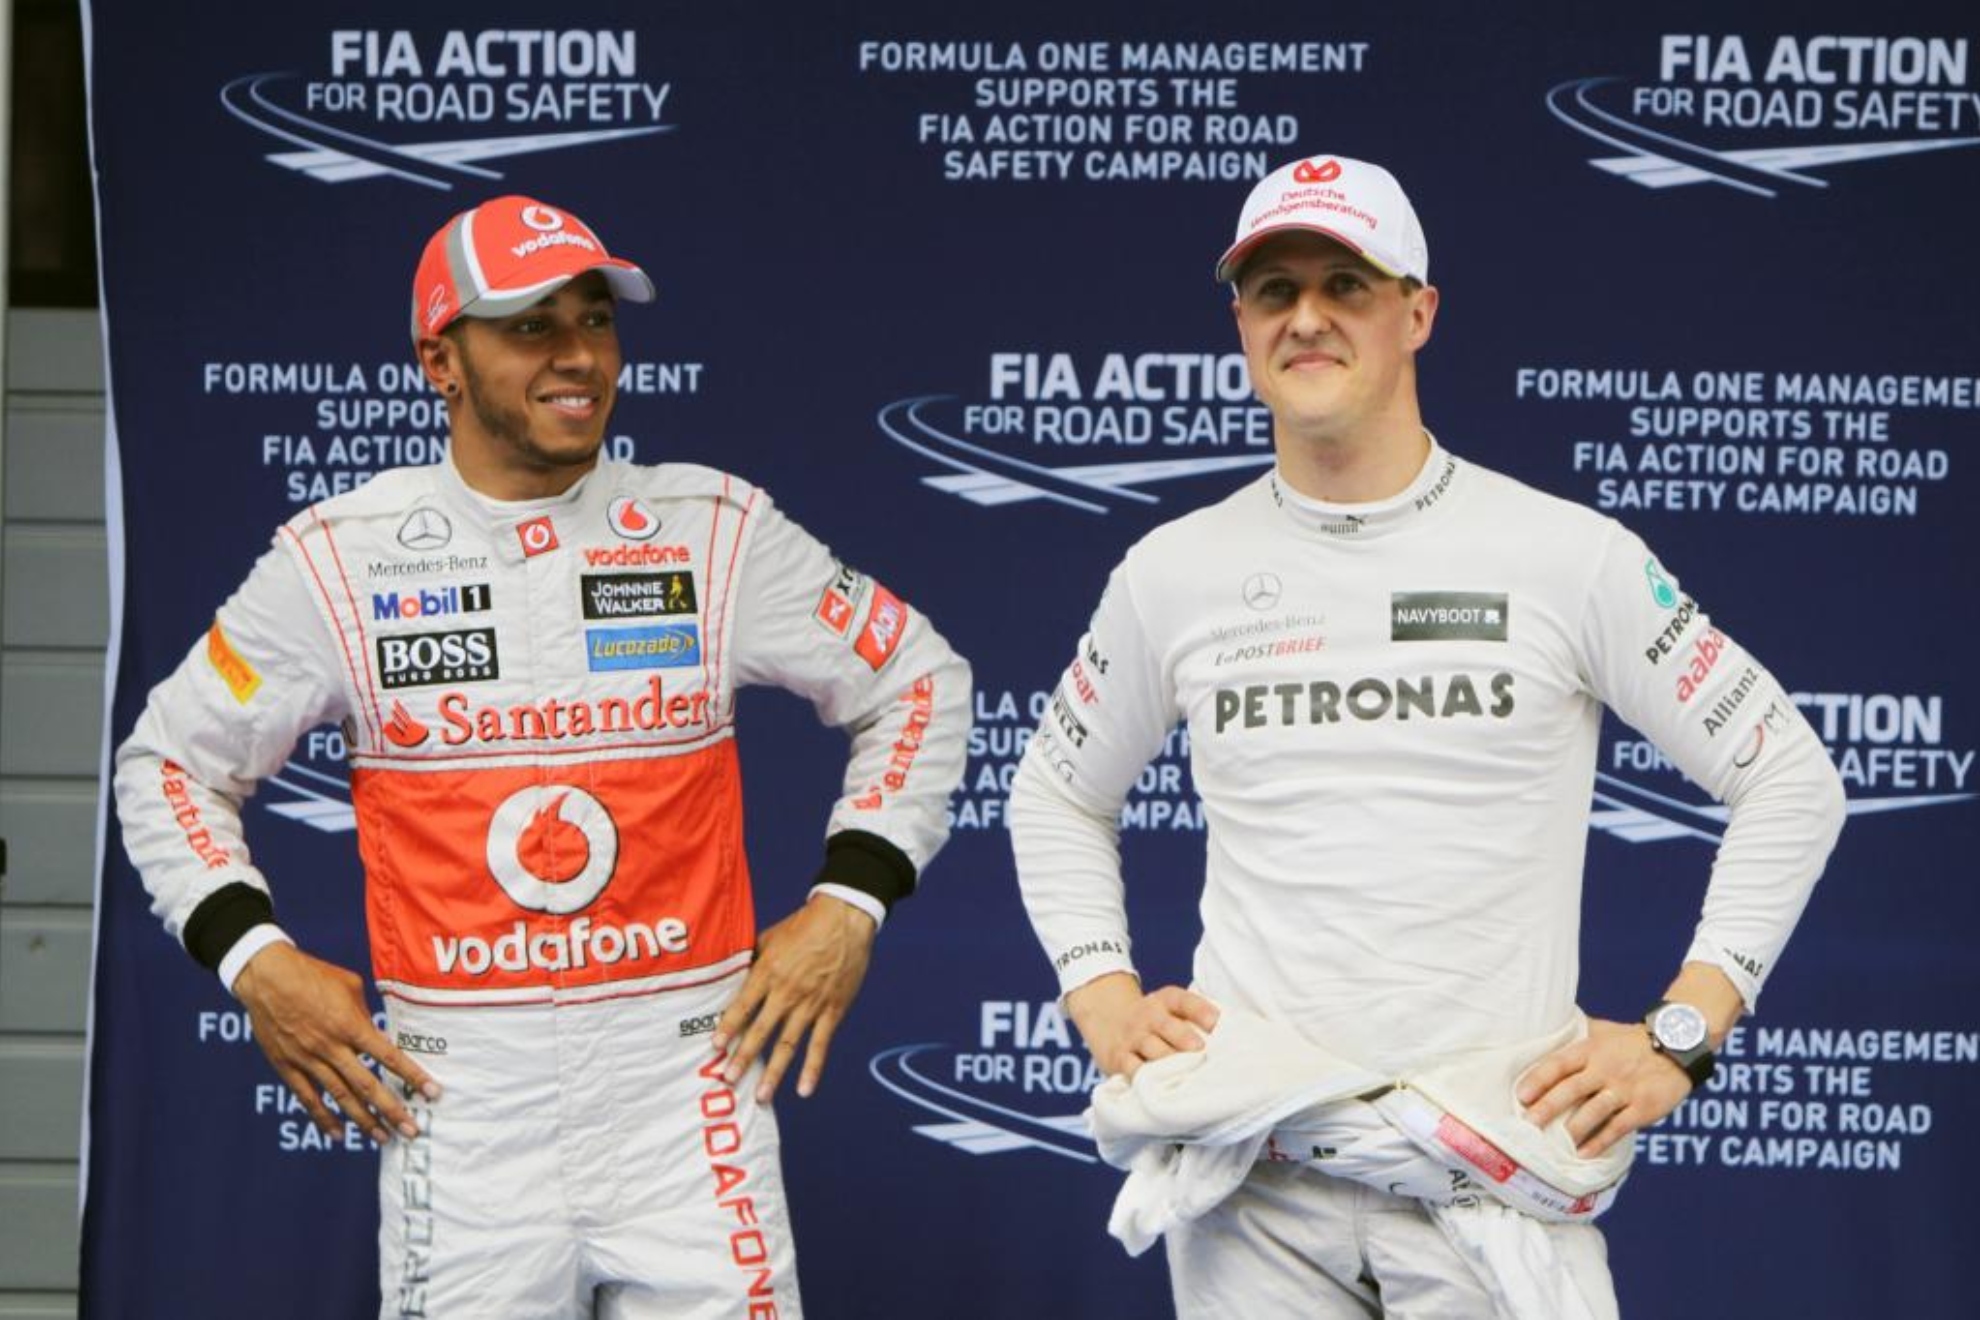 Lewis Hamilton and Michael Schumacher, in 2012.